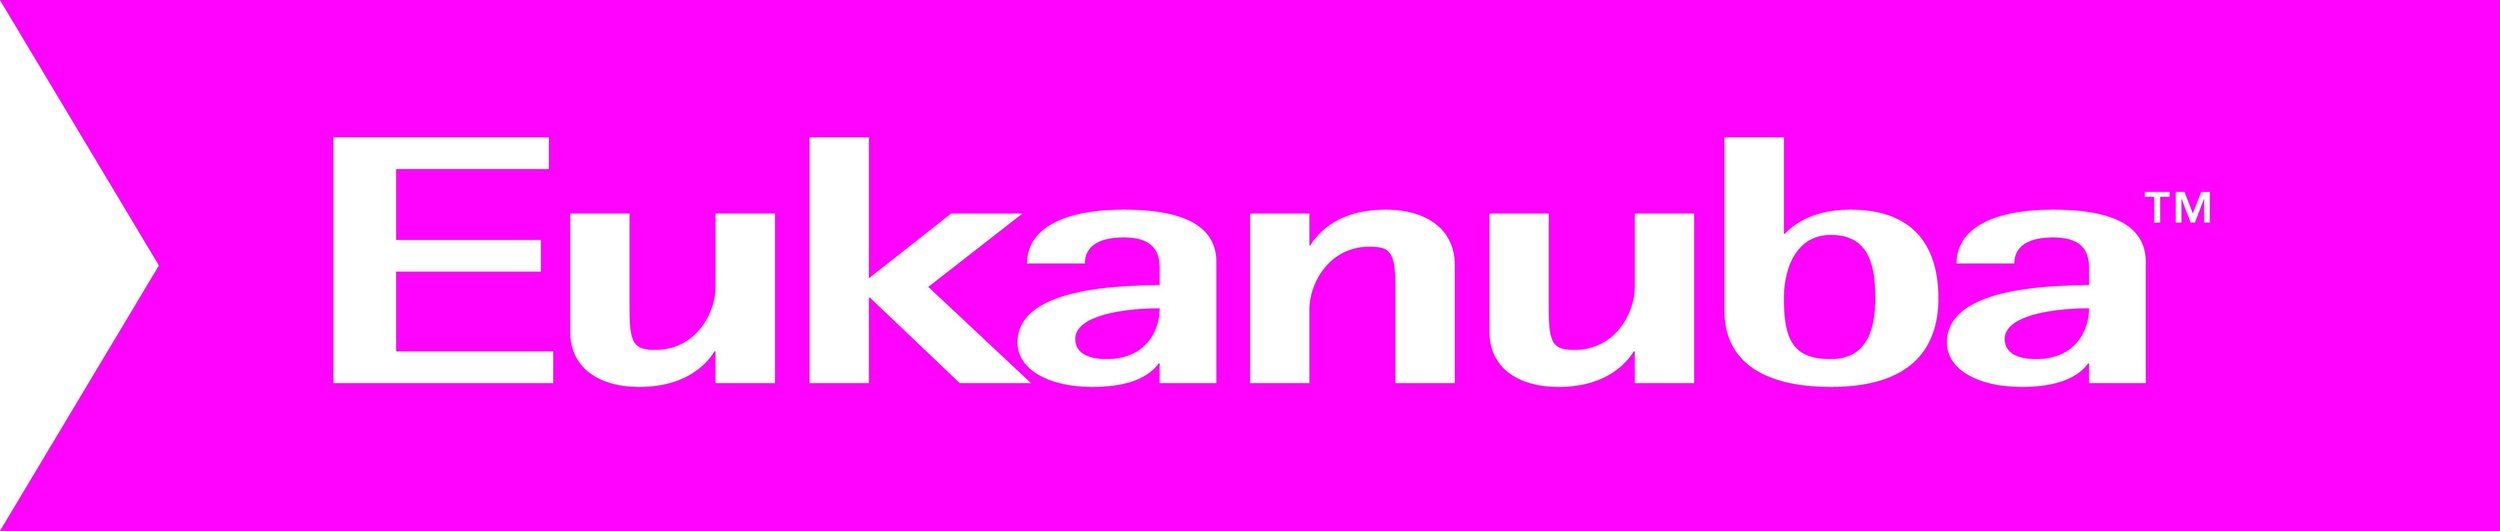 Eukanuba_Horizontal_Brandmark.jpg